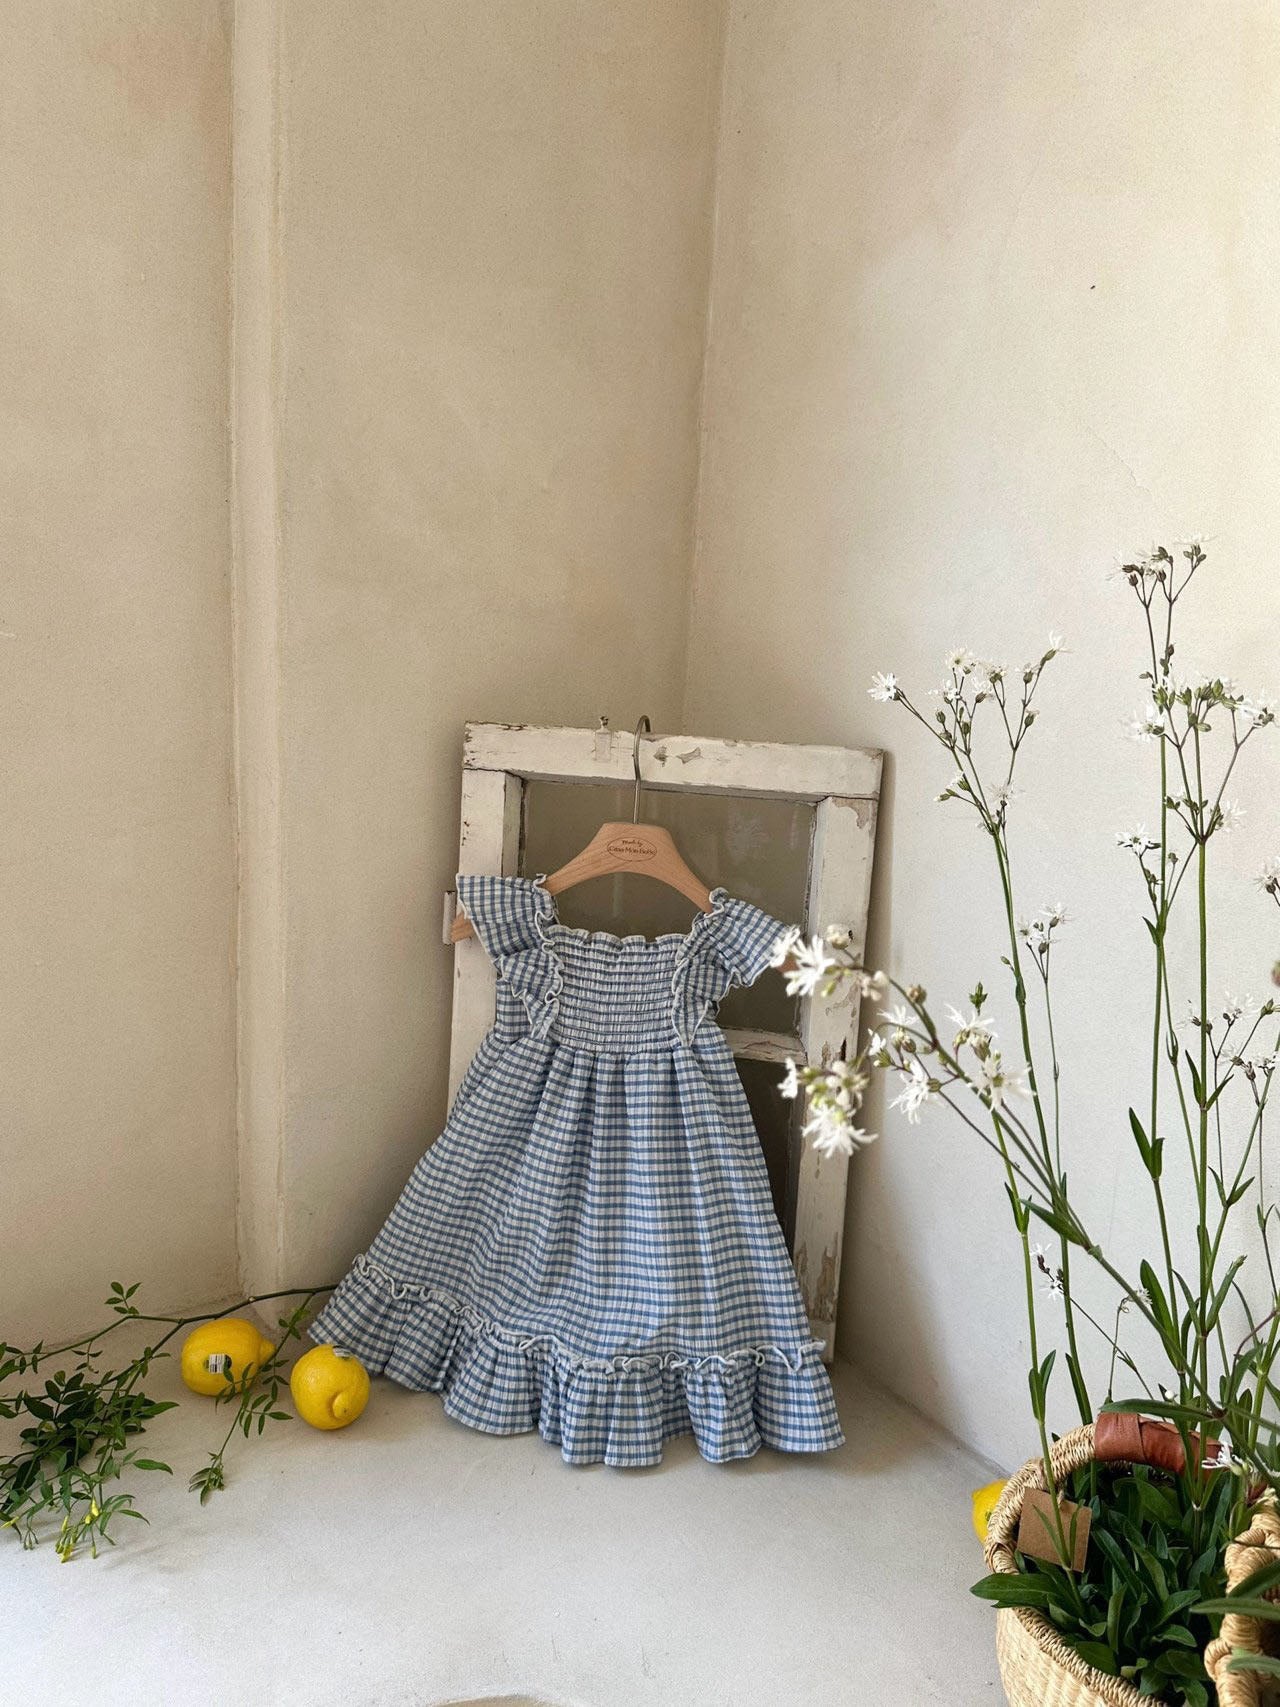 Toddler Monbebe Gingham Ruffle Short Sleeve Dress (1-6y) - 2 Colors